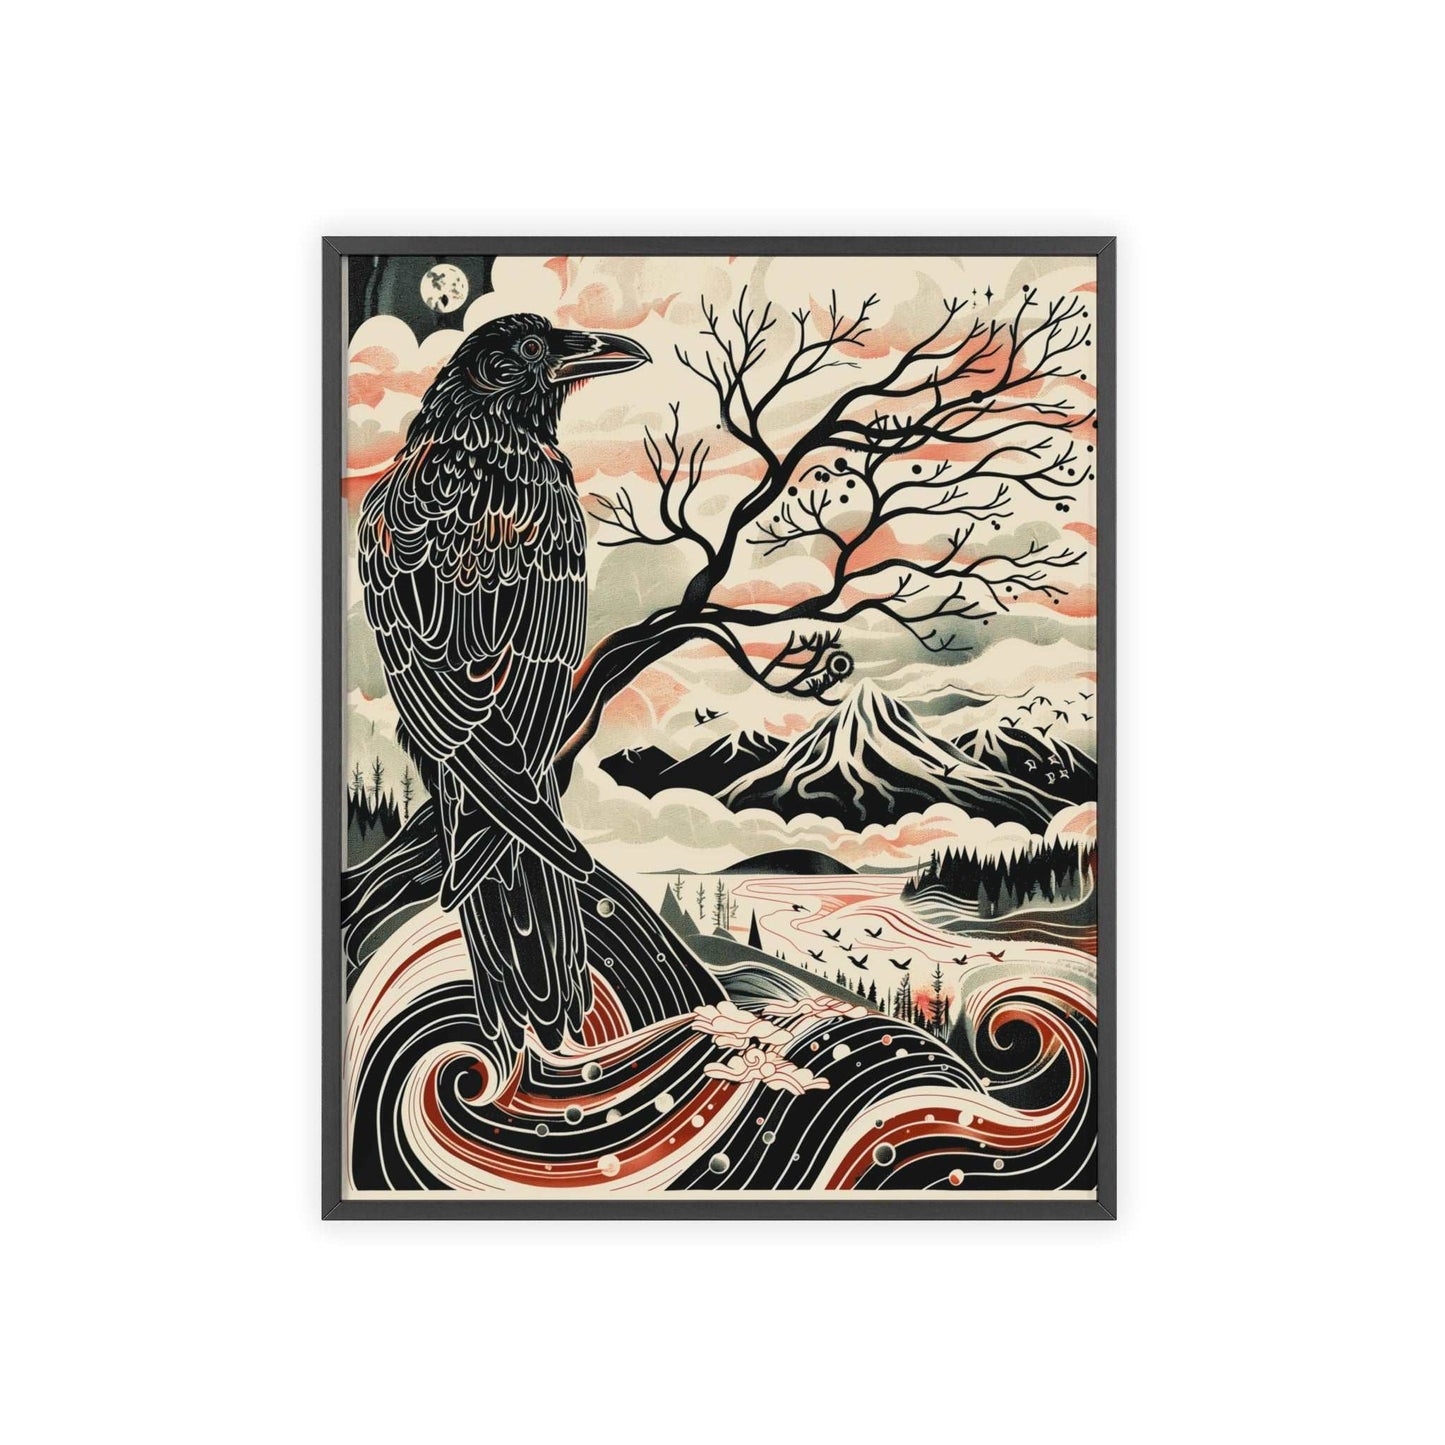 crow poster, bird art, vibrant print, nature decor, wildlife illustration, birdwatching, wall art, decorative background, nature lovers